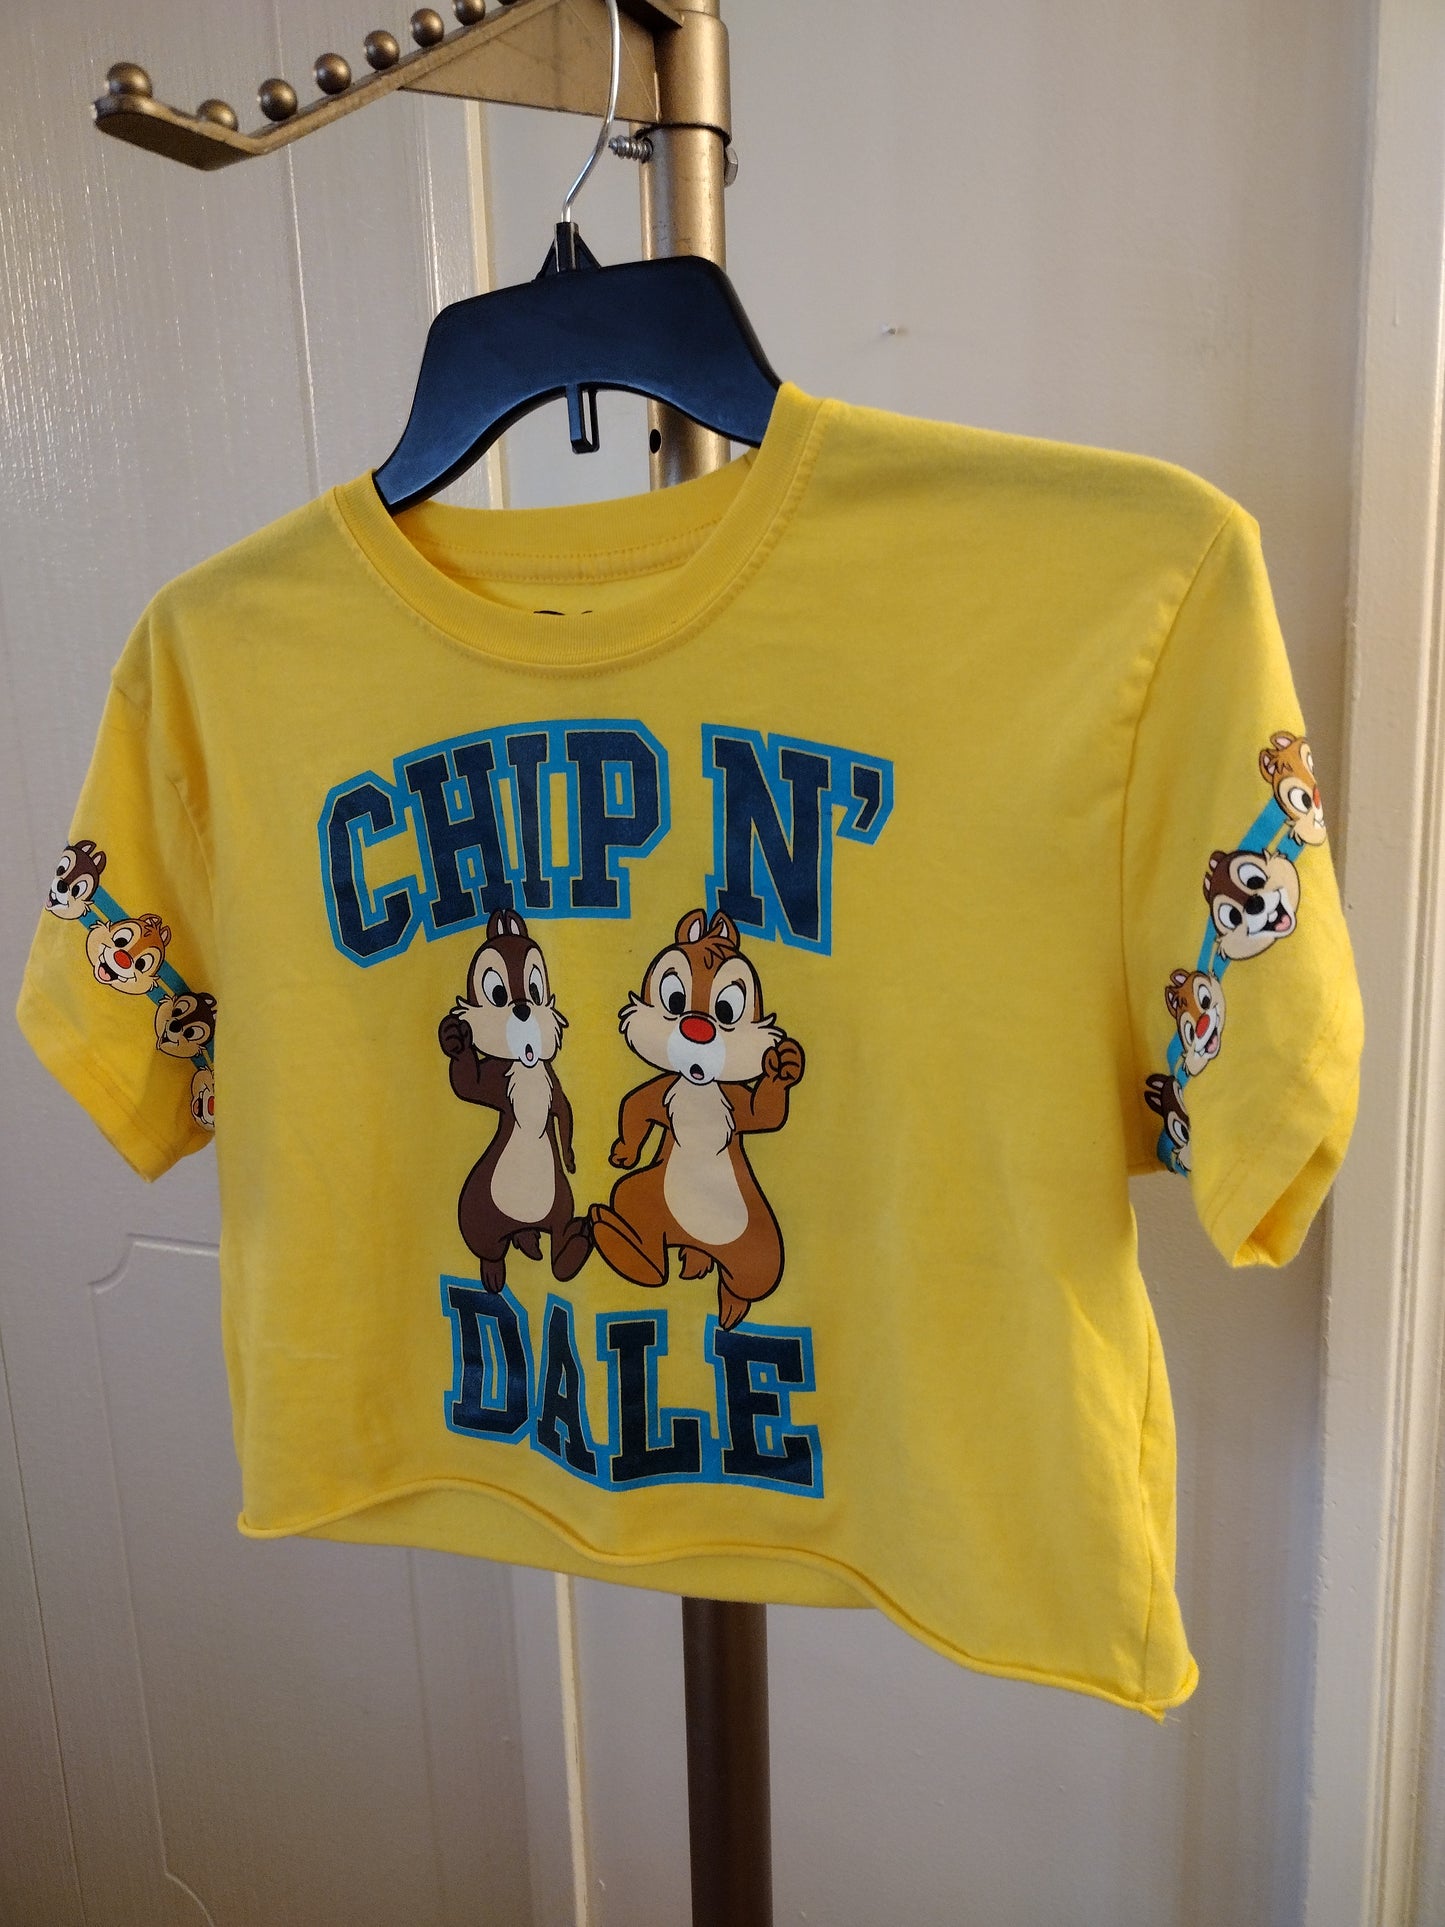 Disney Chip N Dale Women's In Trouble Again! #43 Cut Off T Shirt